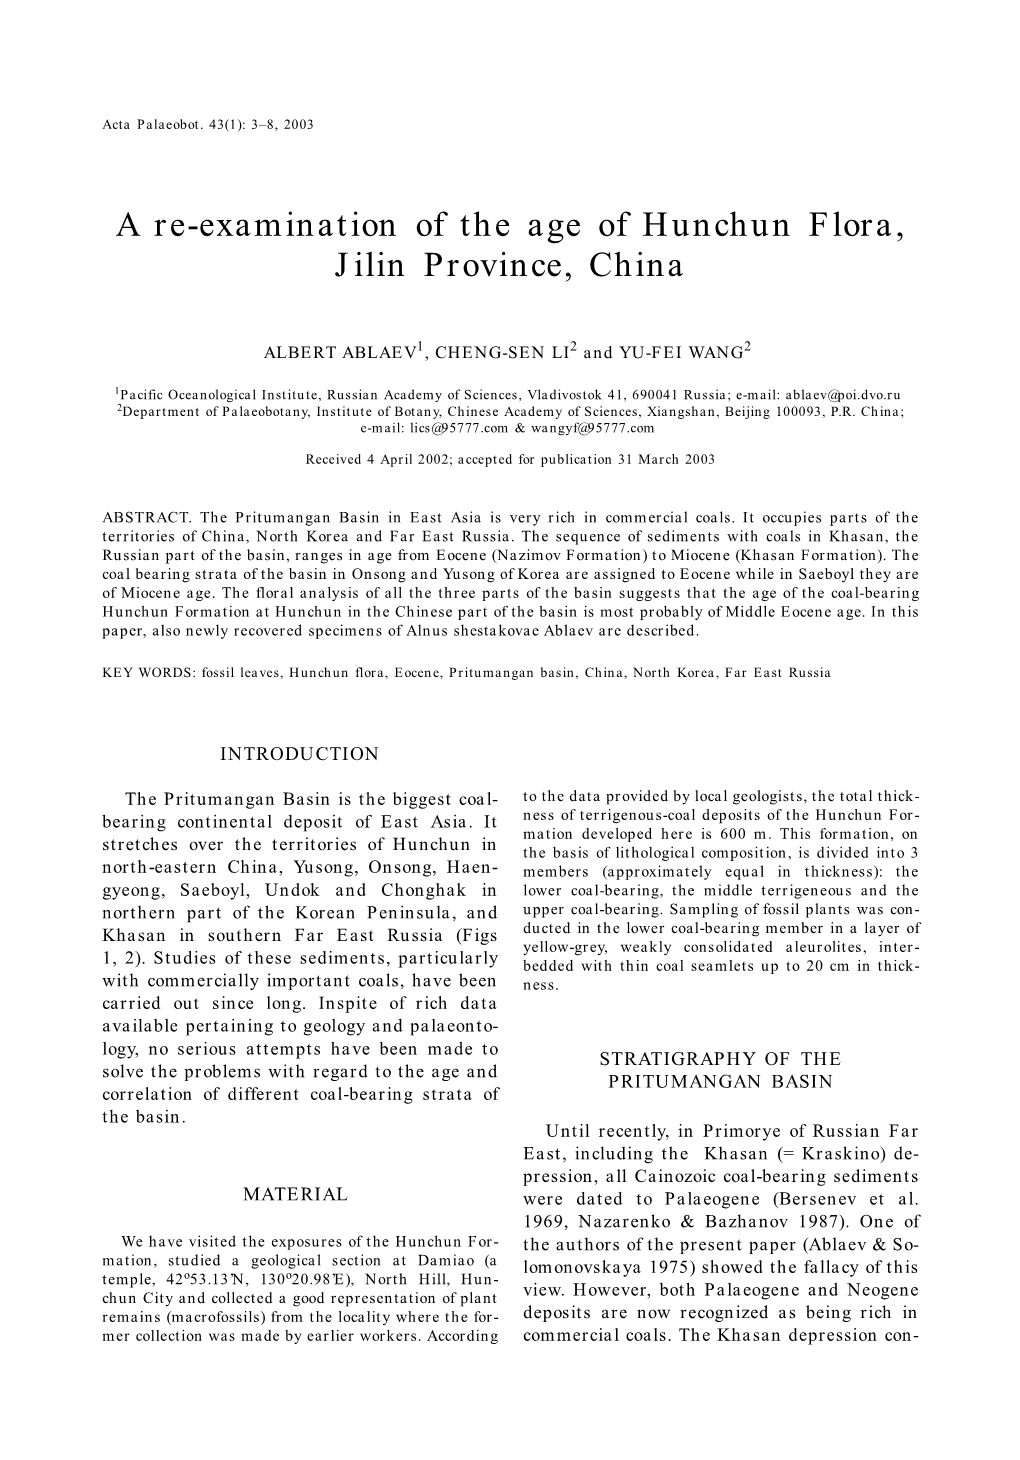 A Re-Examination of the Age of Hunchun Flora, Jilin Province, China